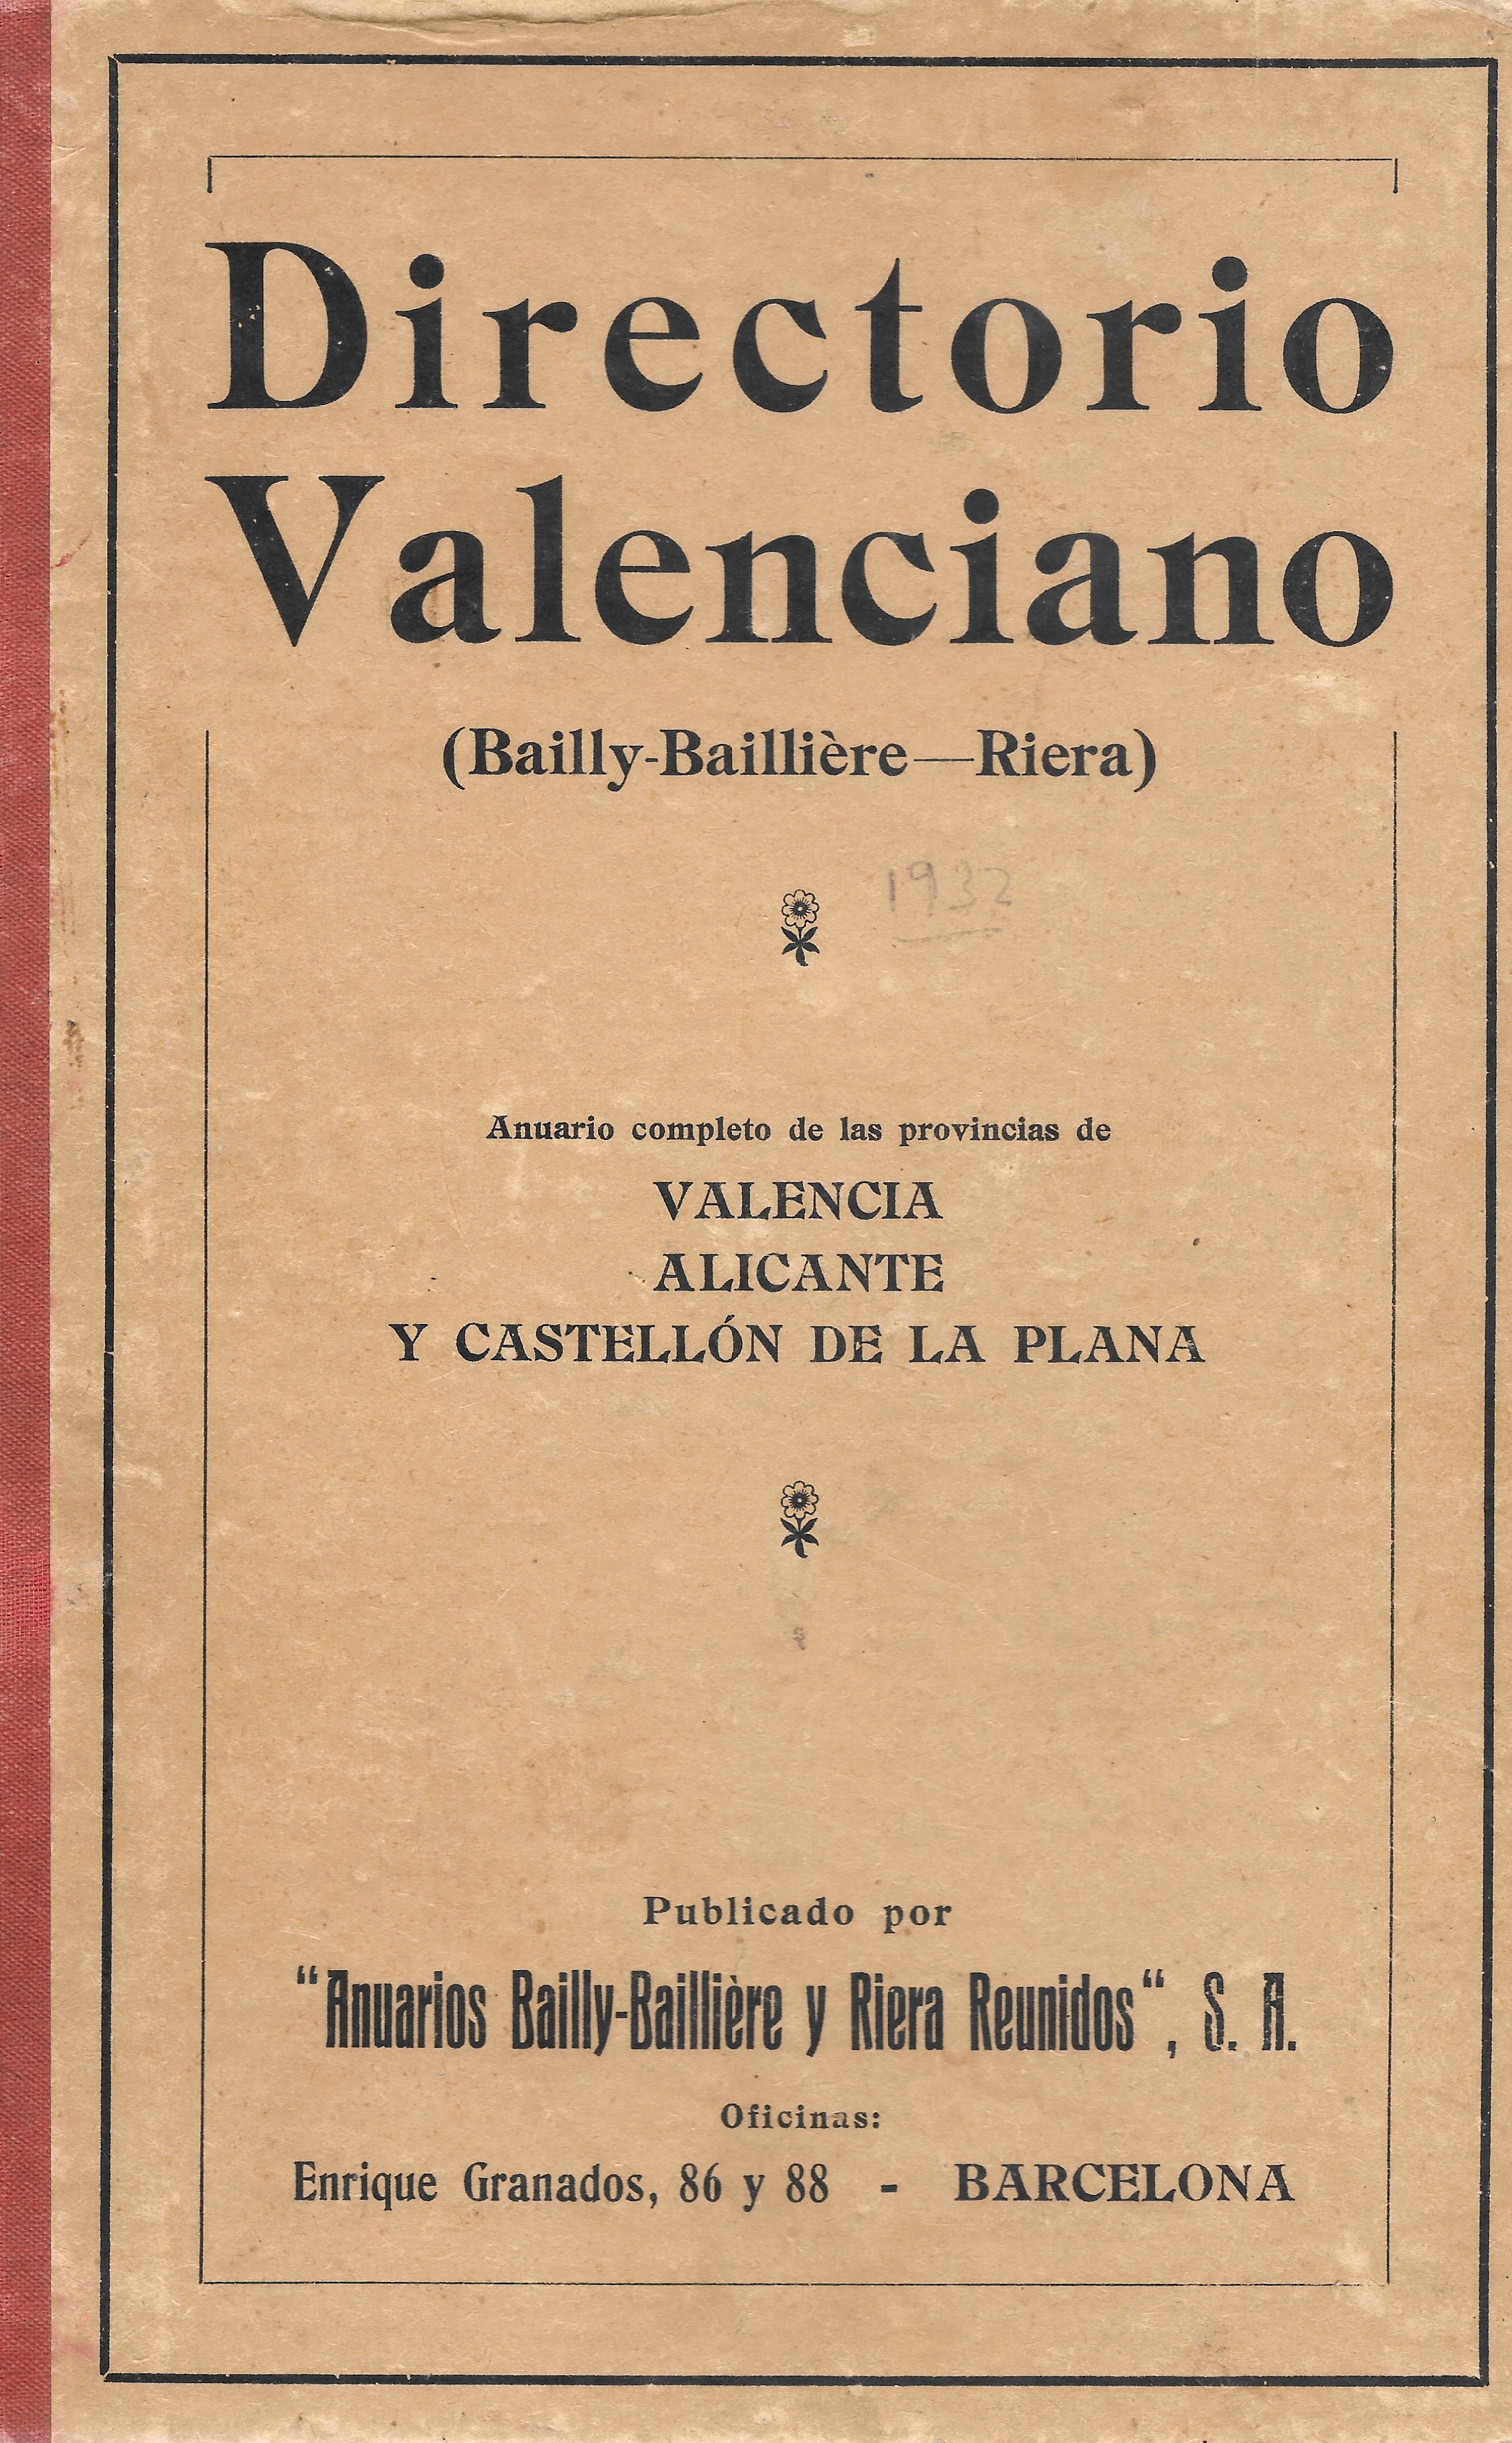 Directorio Valenciano 1932 (Bailly-Baillière-Riera)